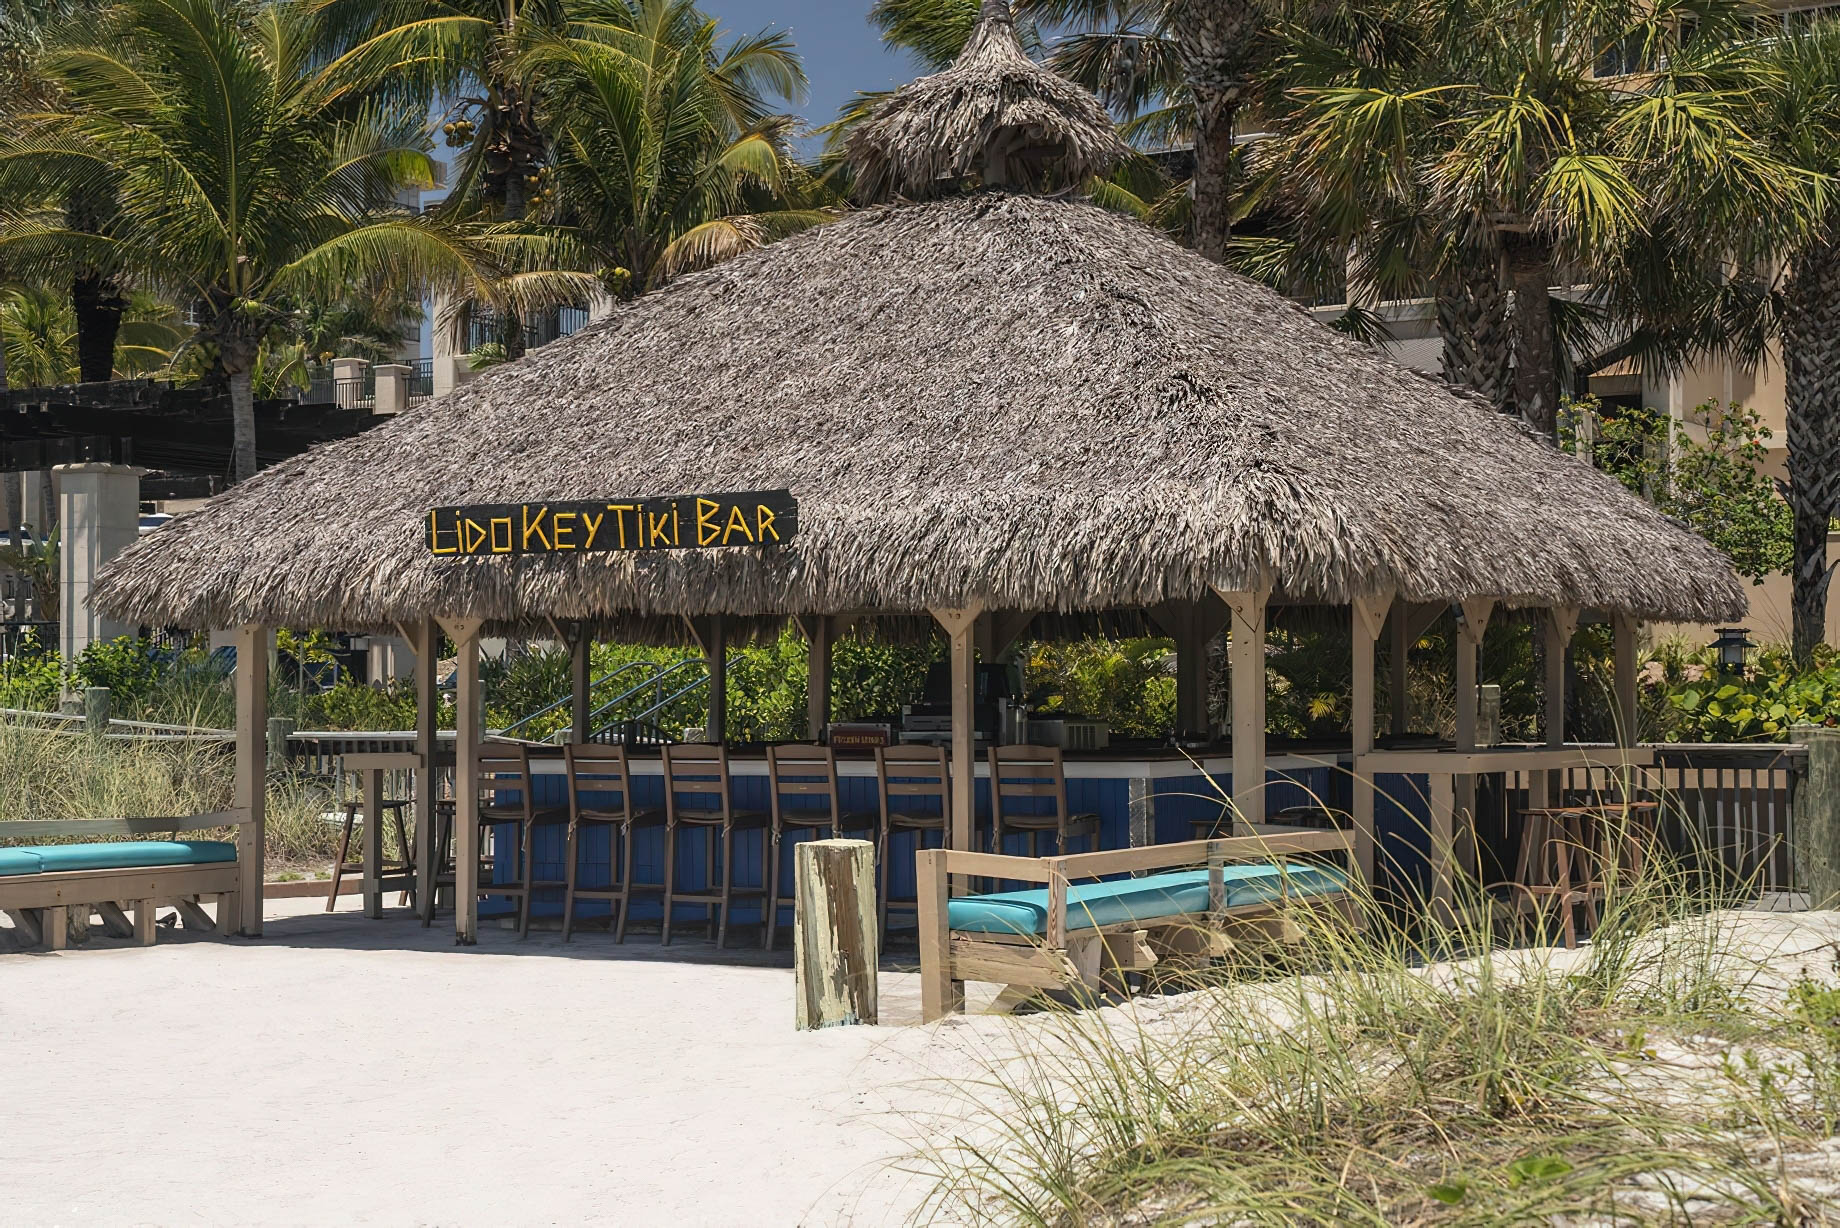 The Ritz-Carlton Beach Club Resort – Lido Key, Sarasota, FL, USA – The Lido Key Tiki Bar